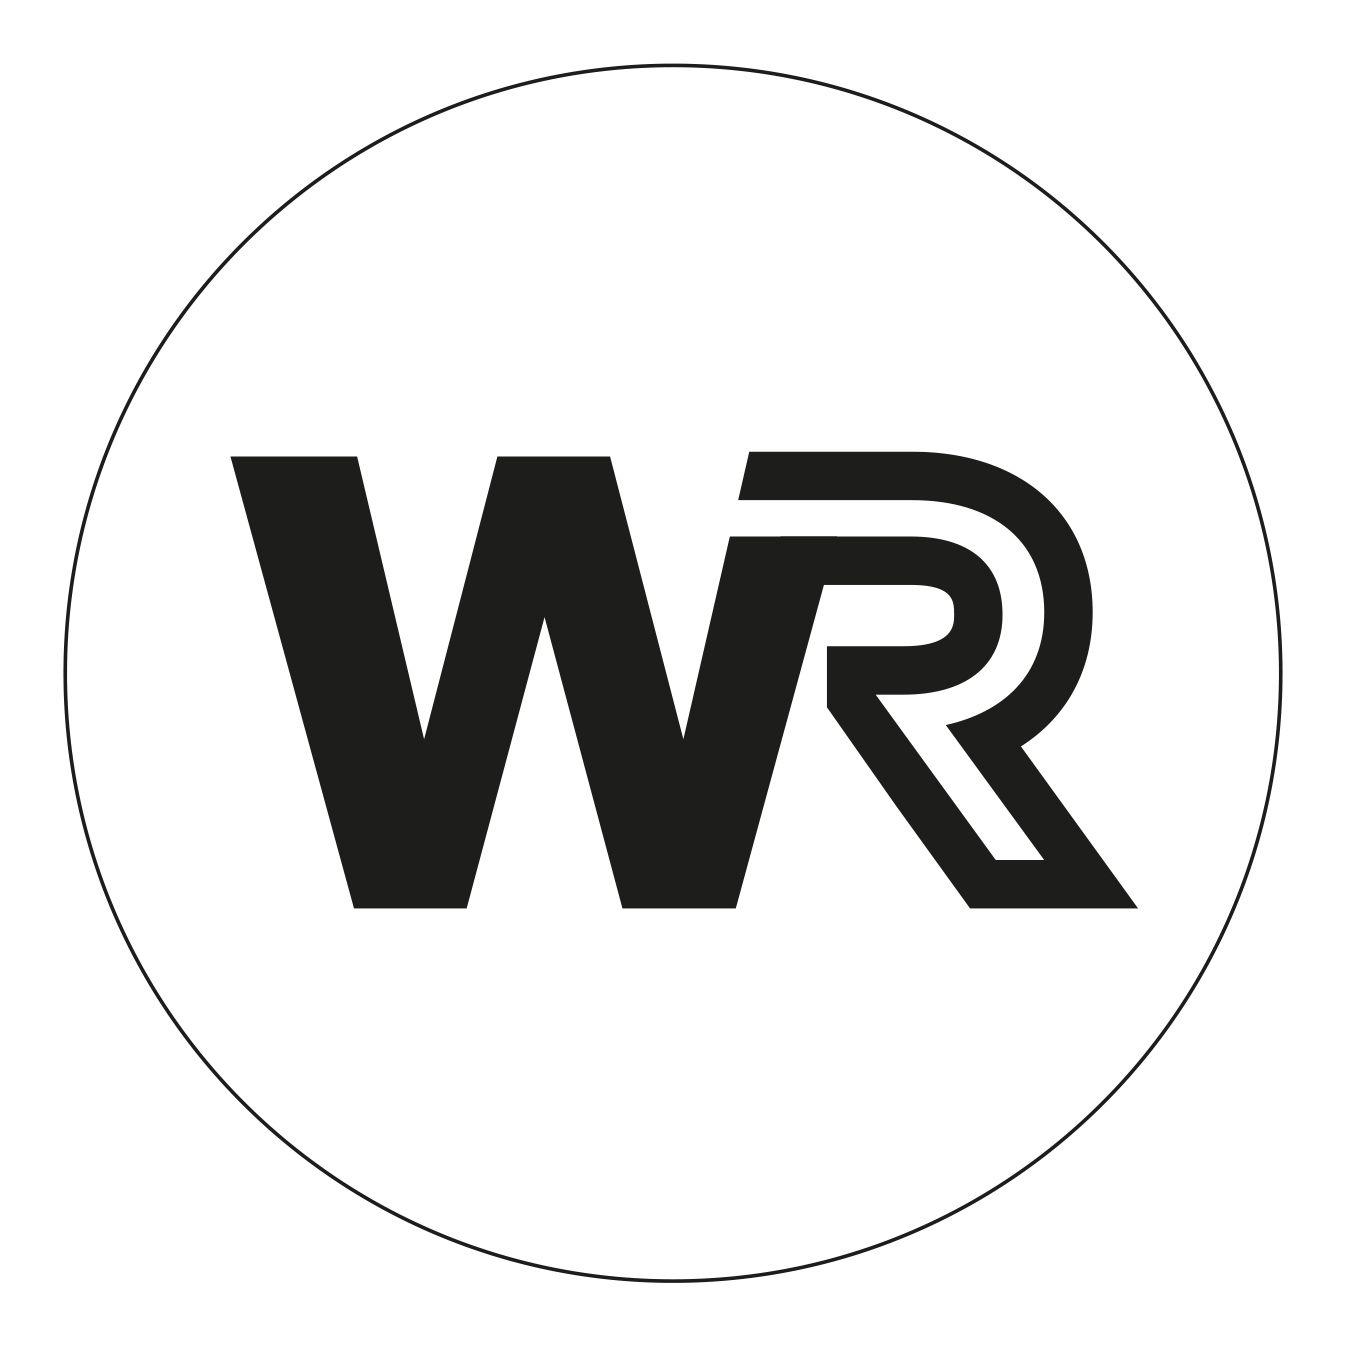 WRR Logo - Search. NZ Transport Agency